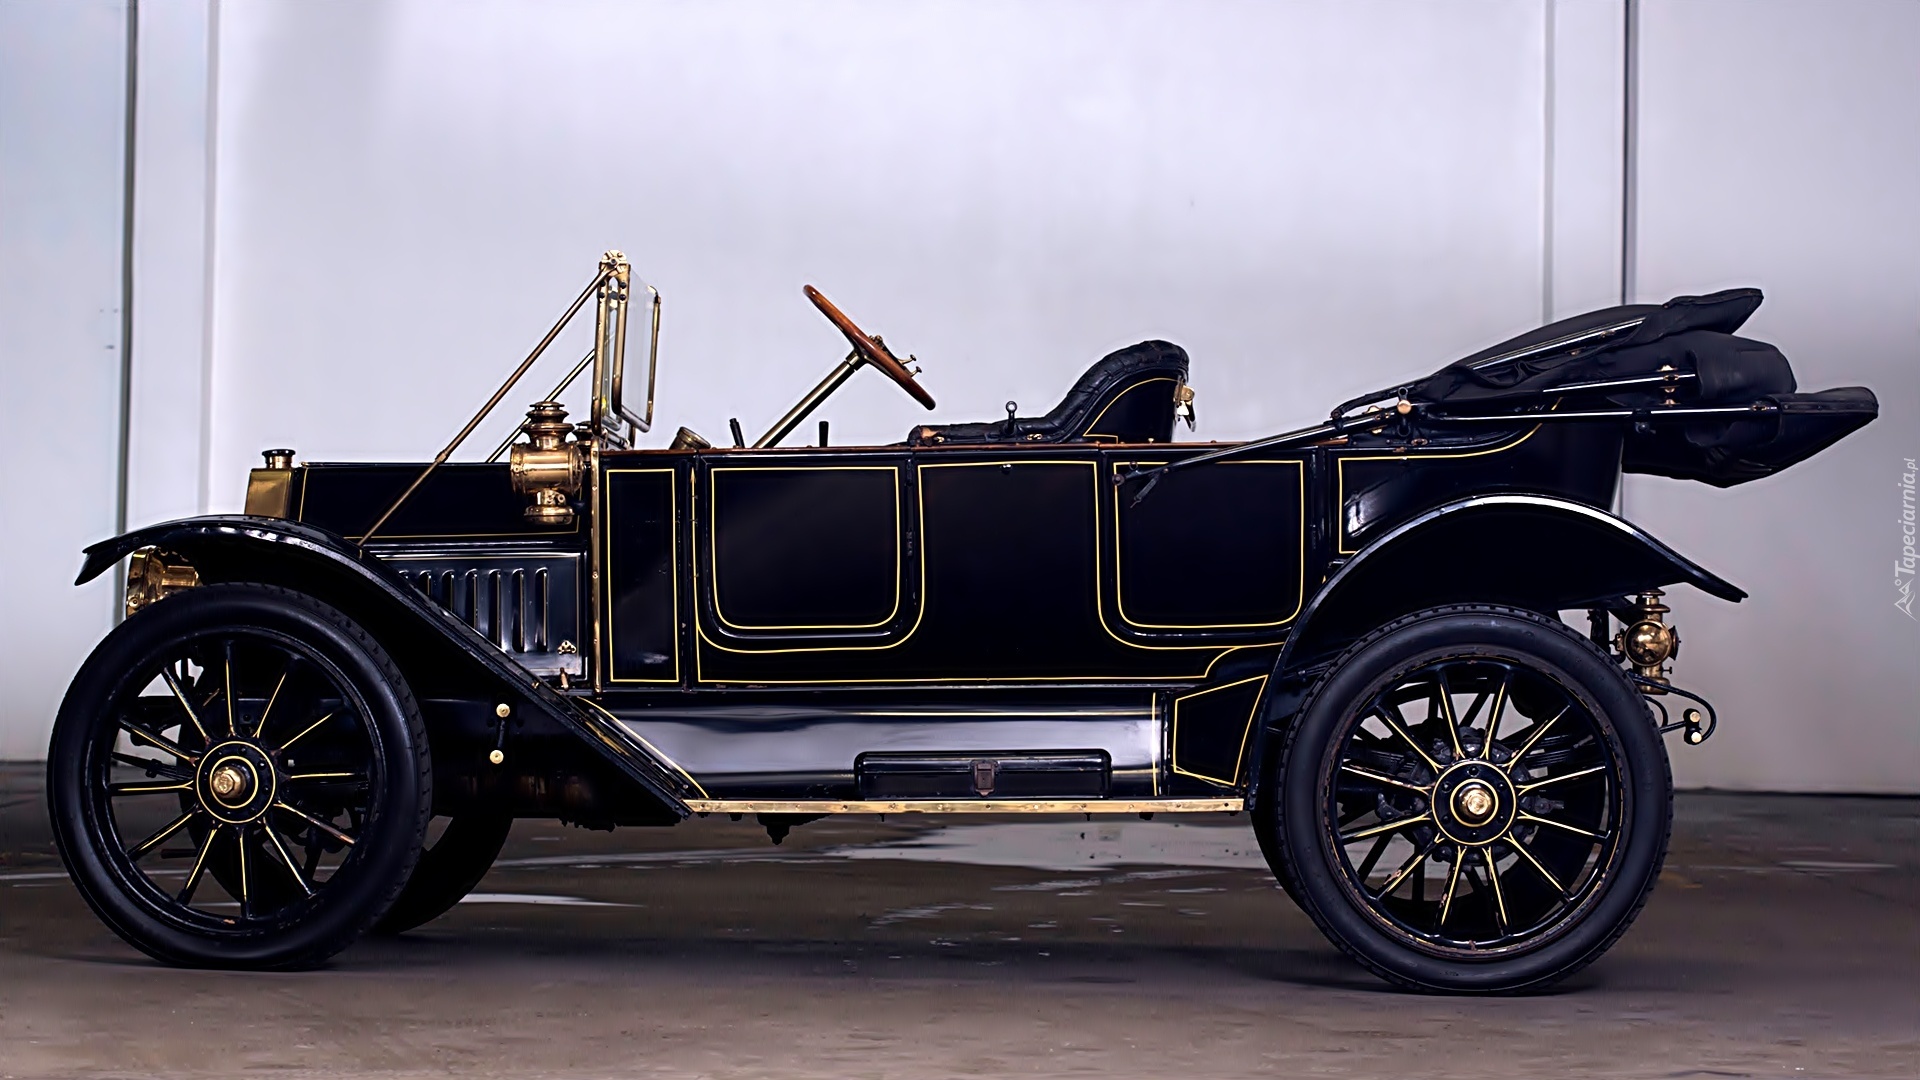 Samochód, Zabytkowy, Buick, 1912